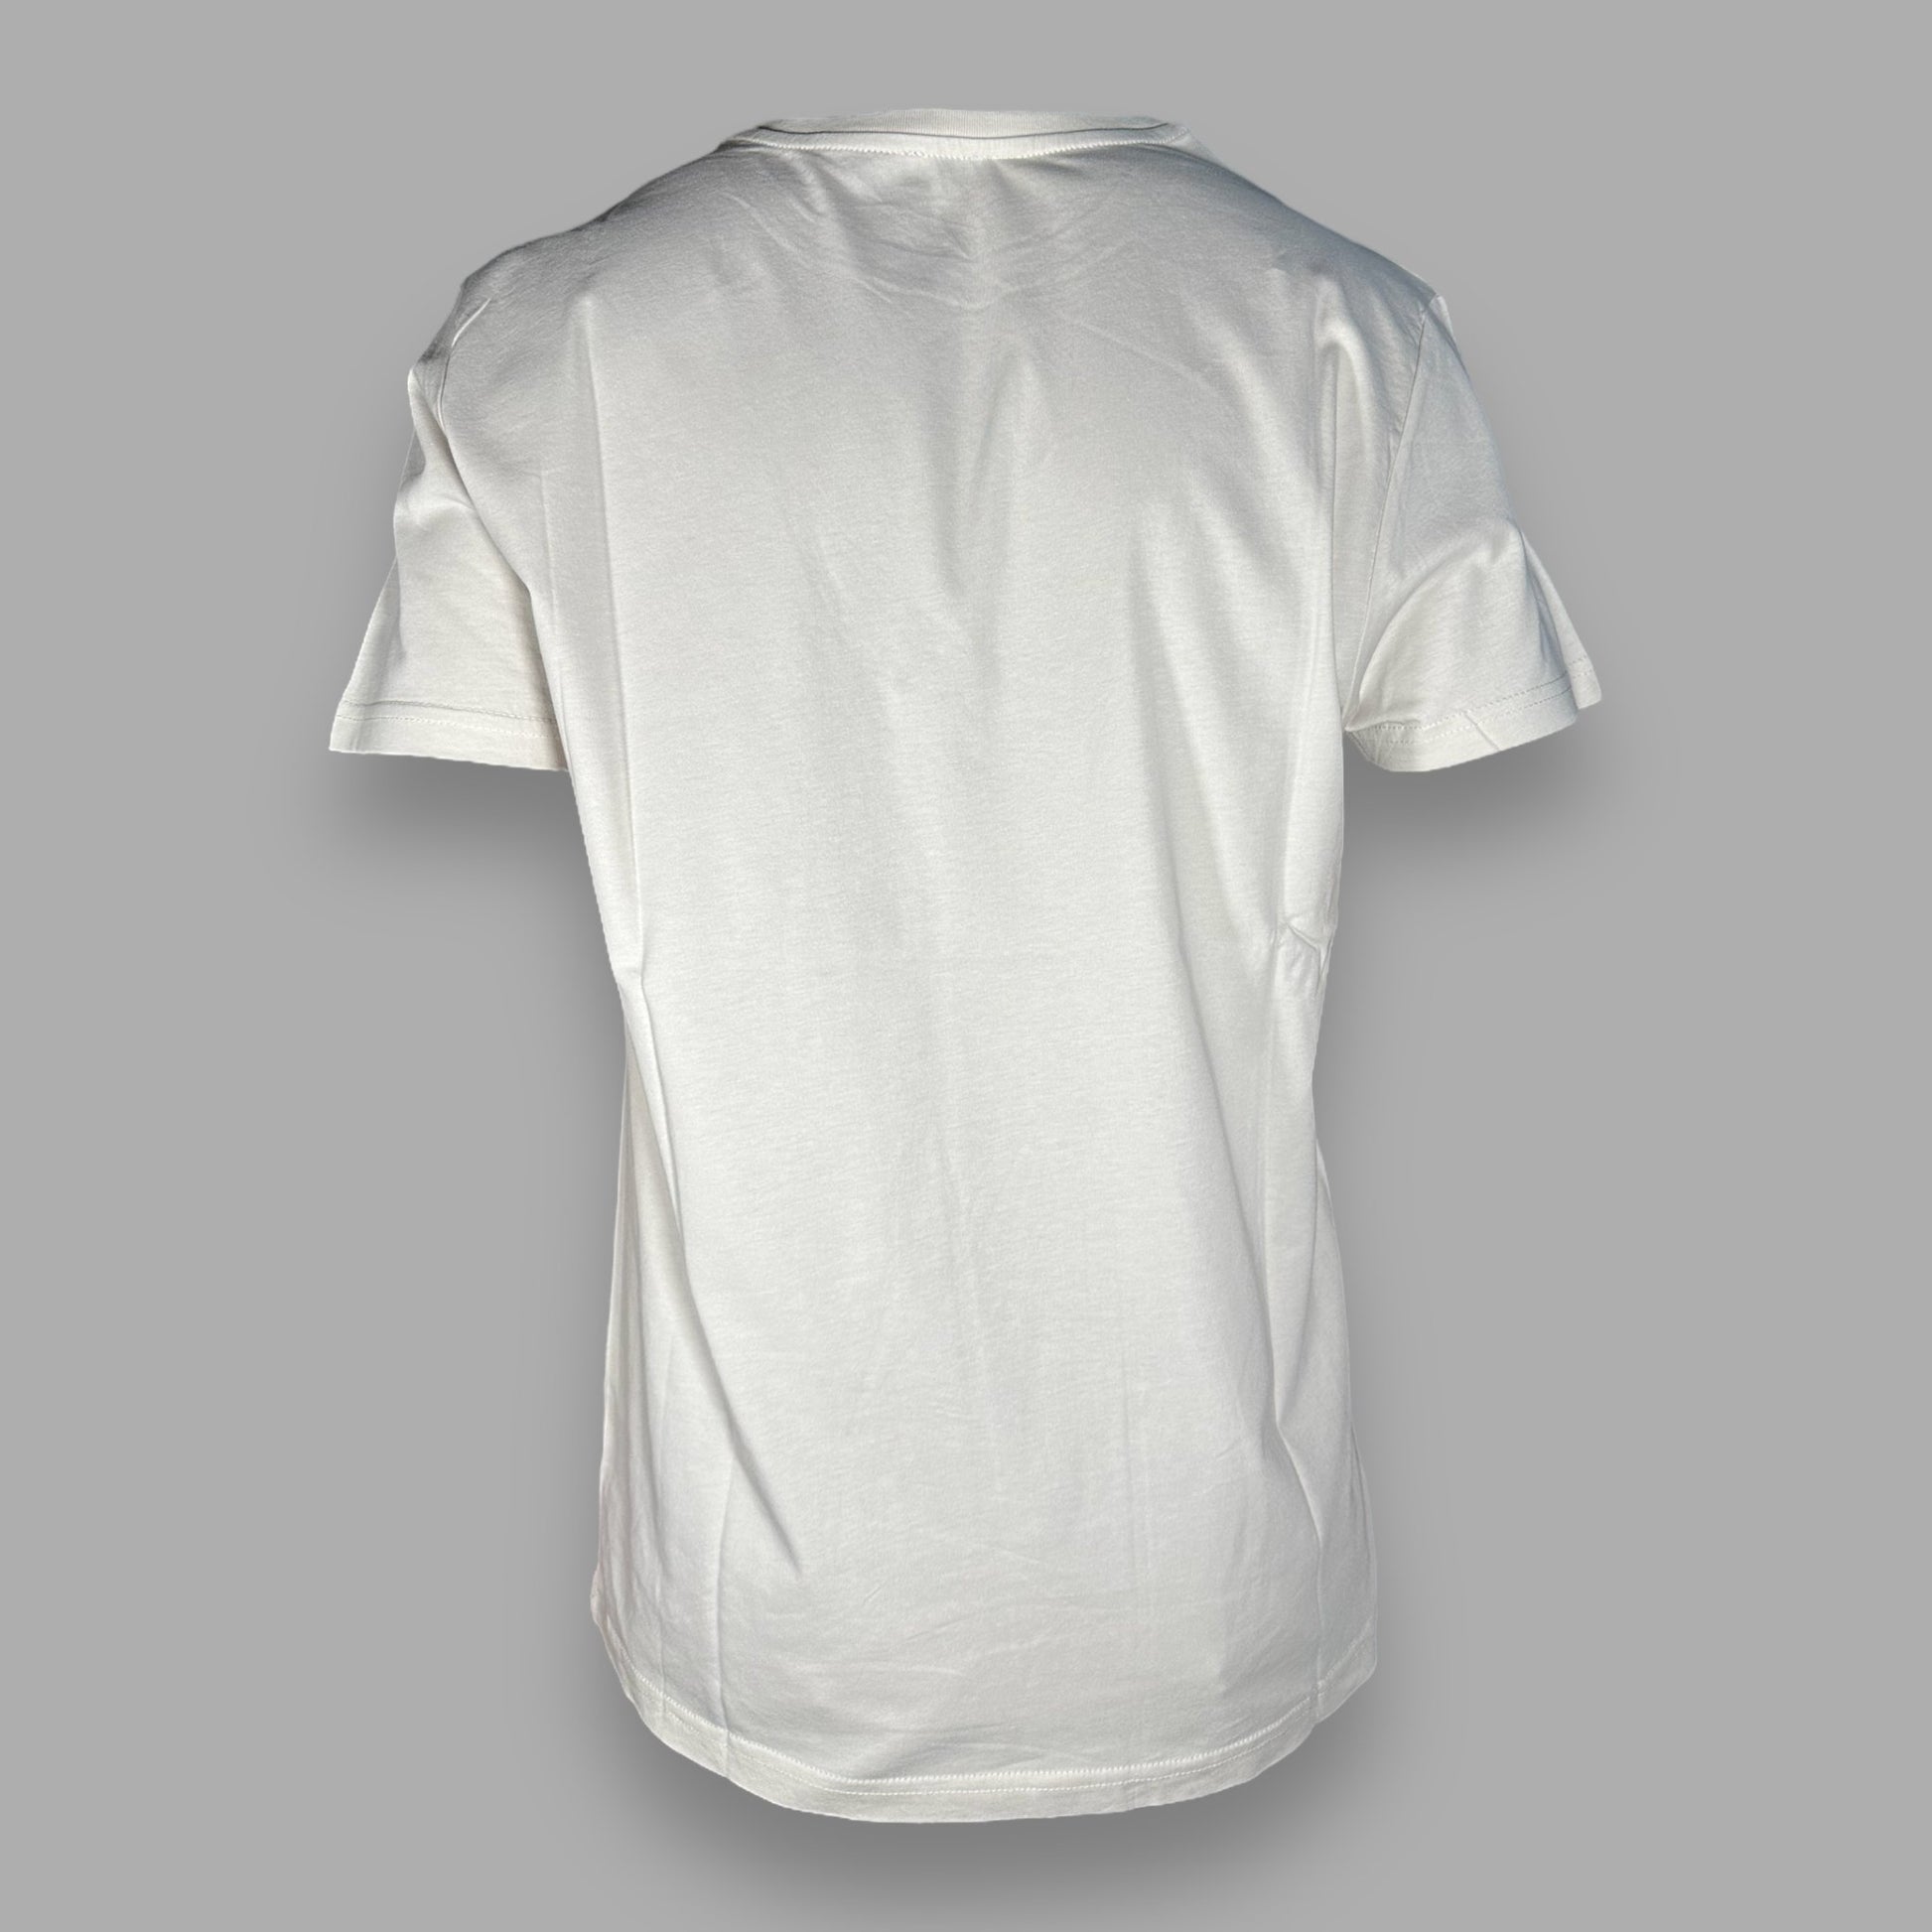 T-shirt Kenzo Tigre - Urban Clothing